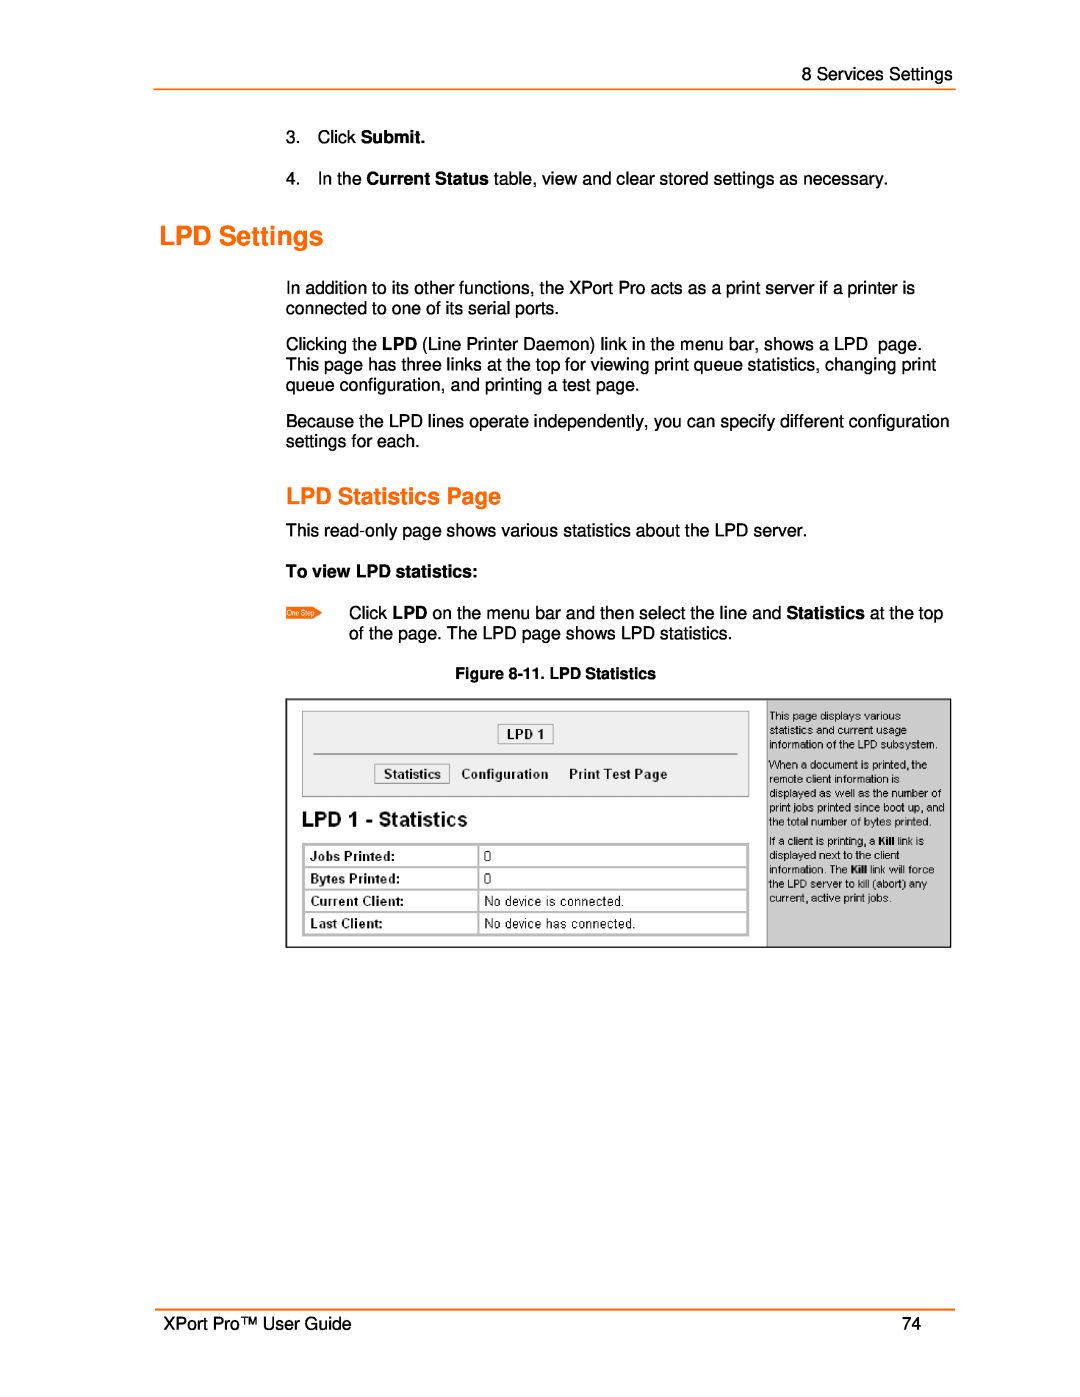 Lantronix 900-560 manual LPD Settings, LPD Statistics Page 